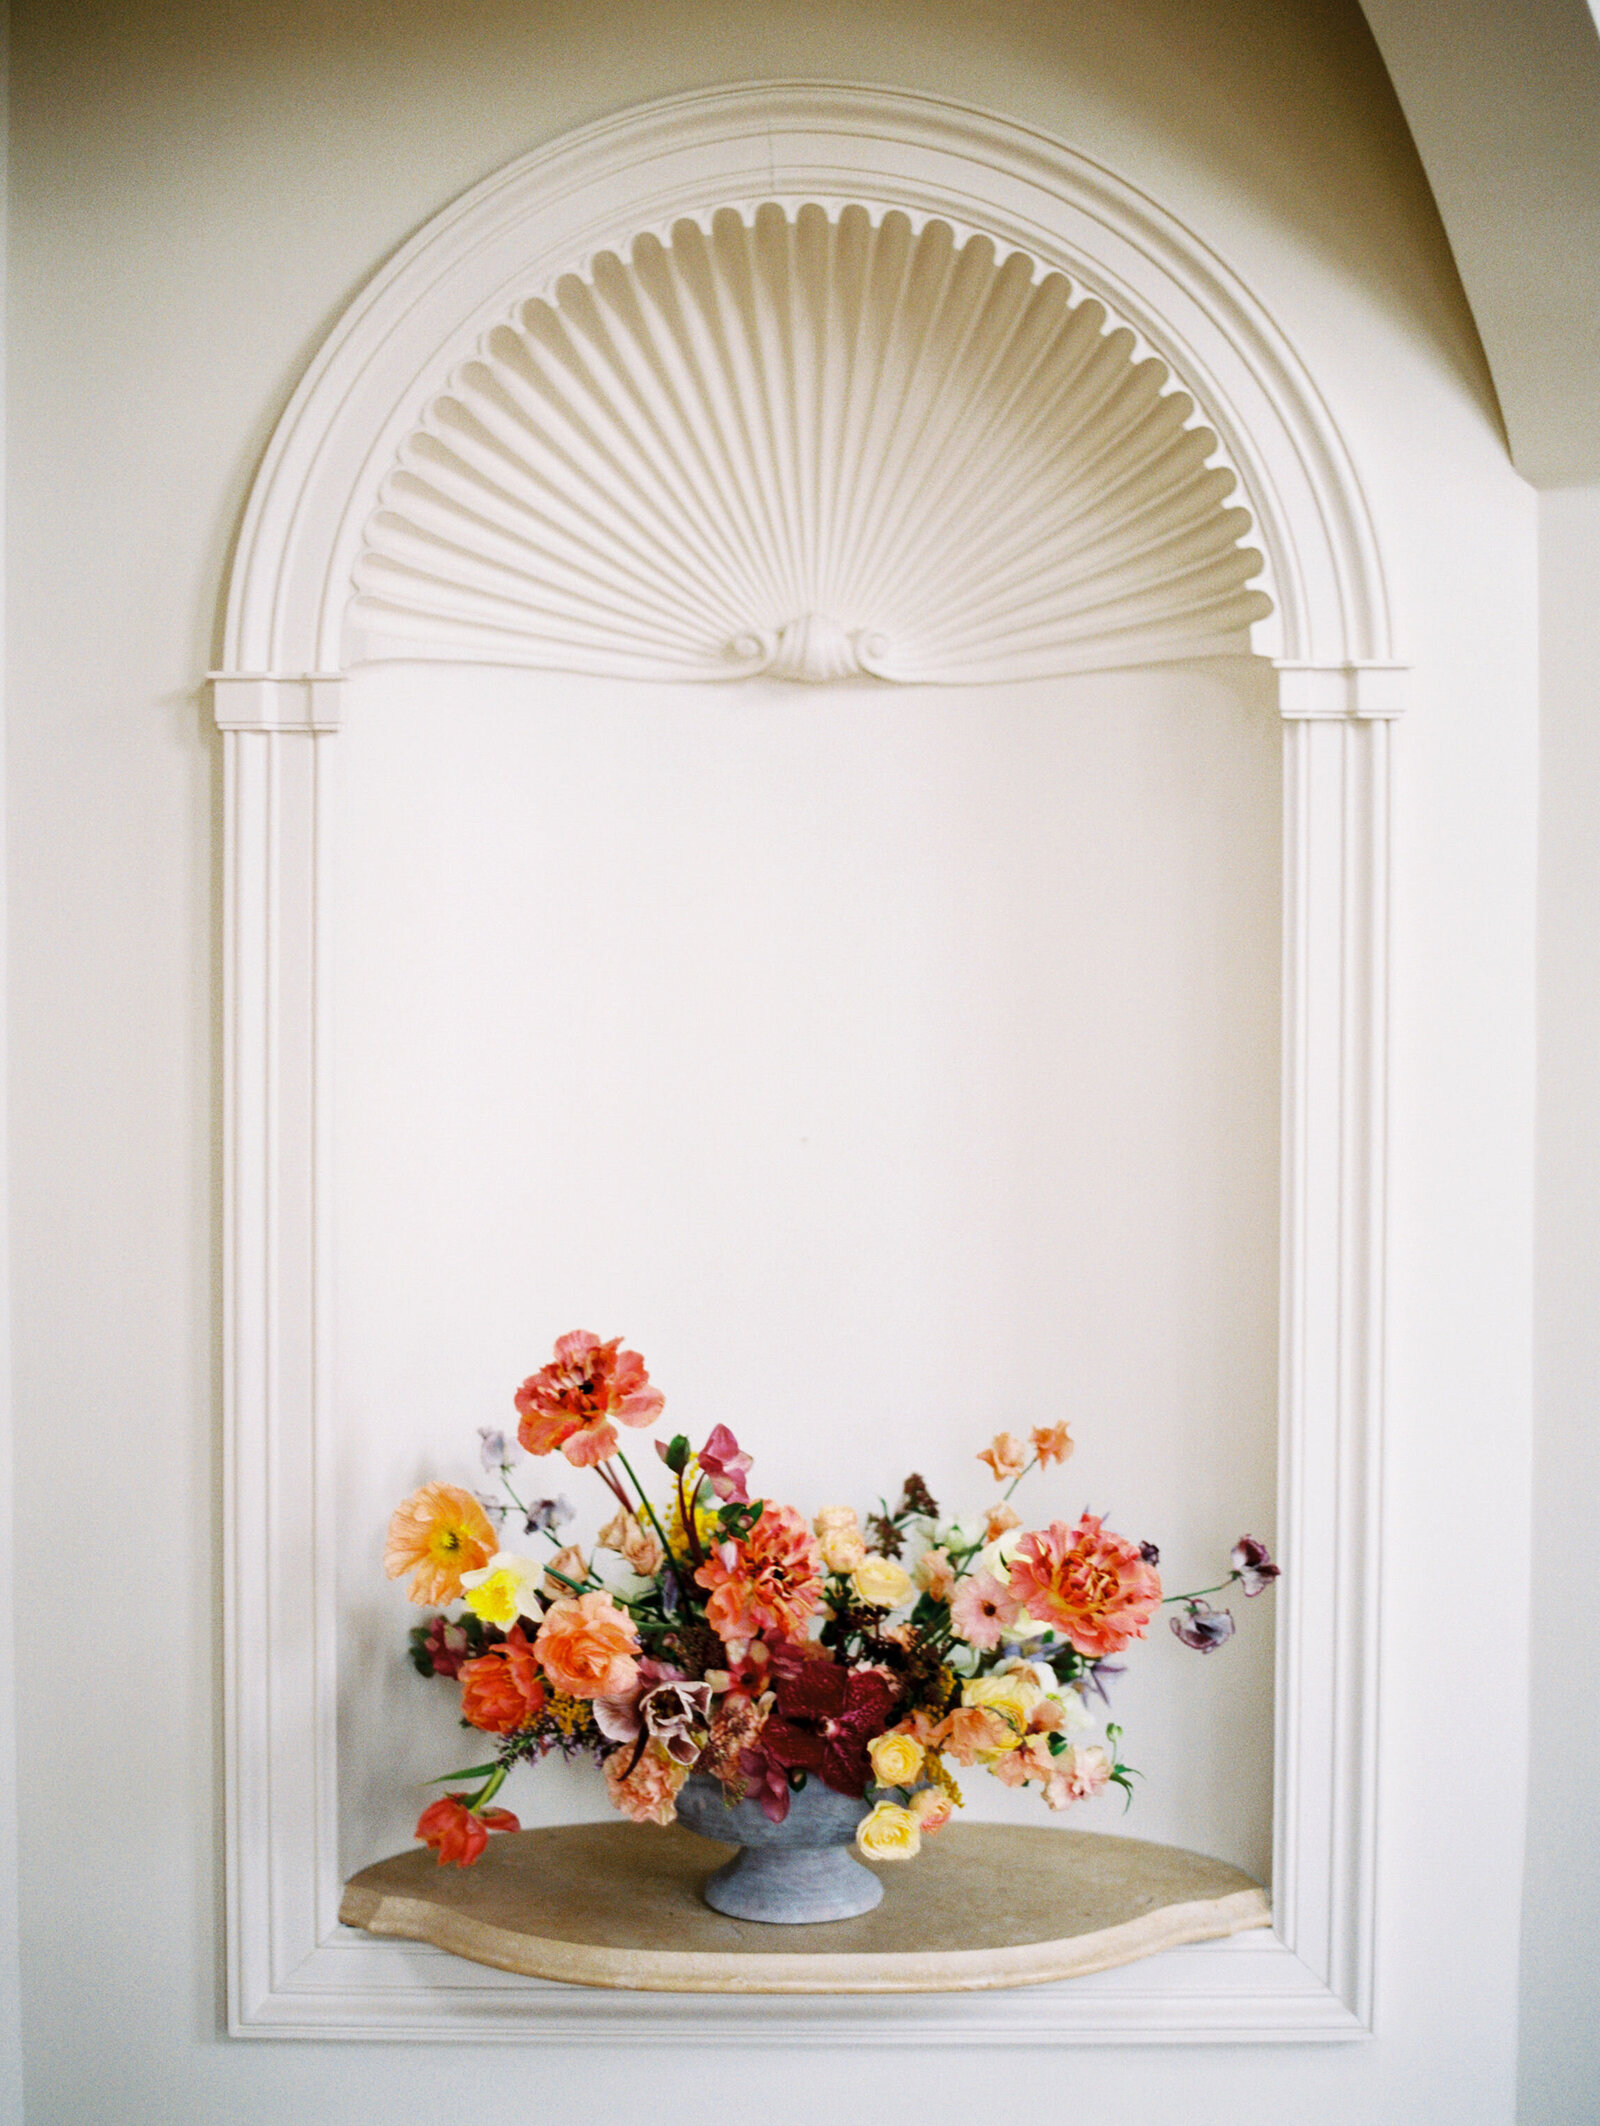 max-owens-design-at-home-floral-arrangements-14-flowers